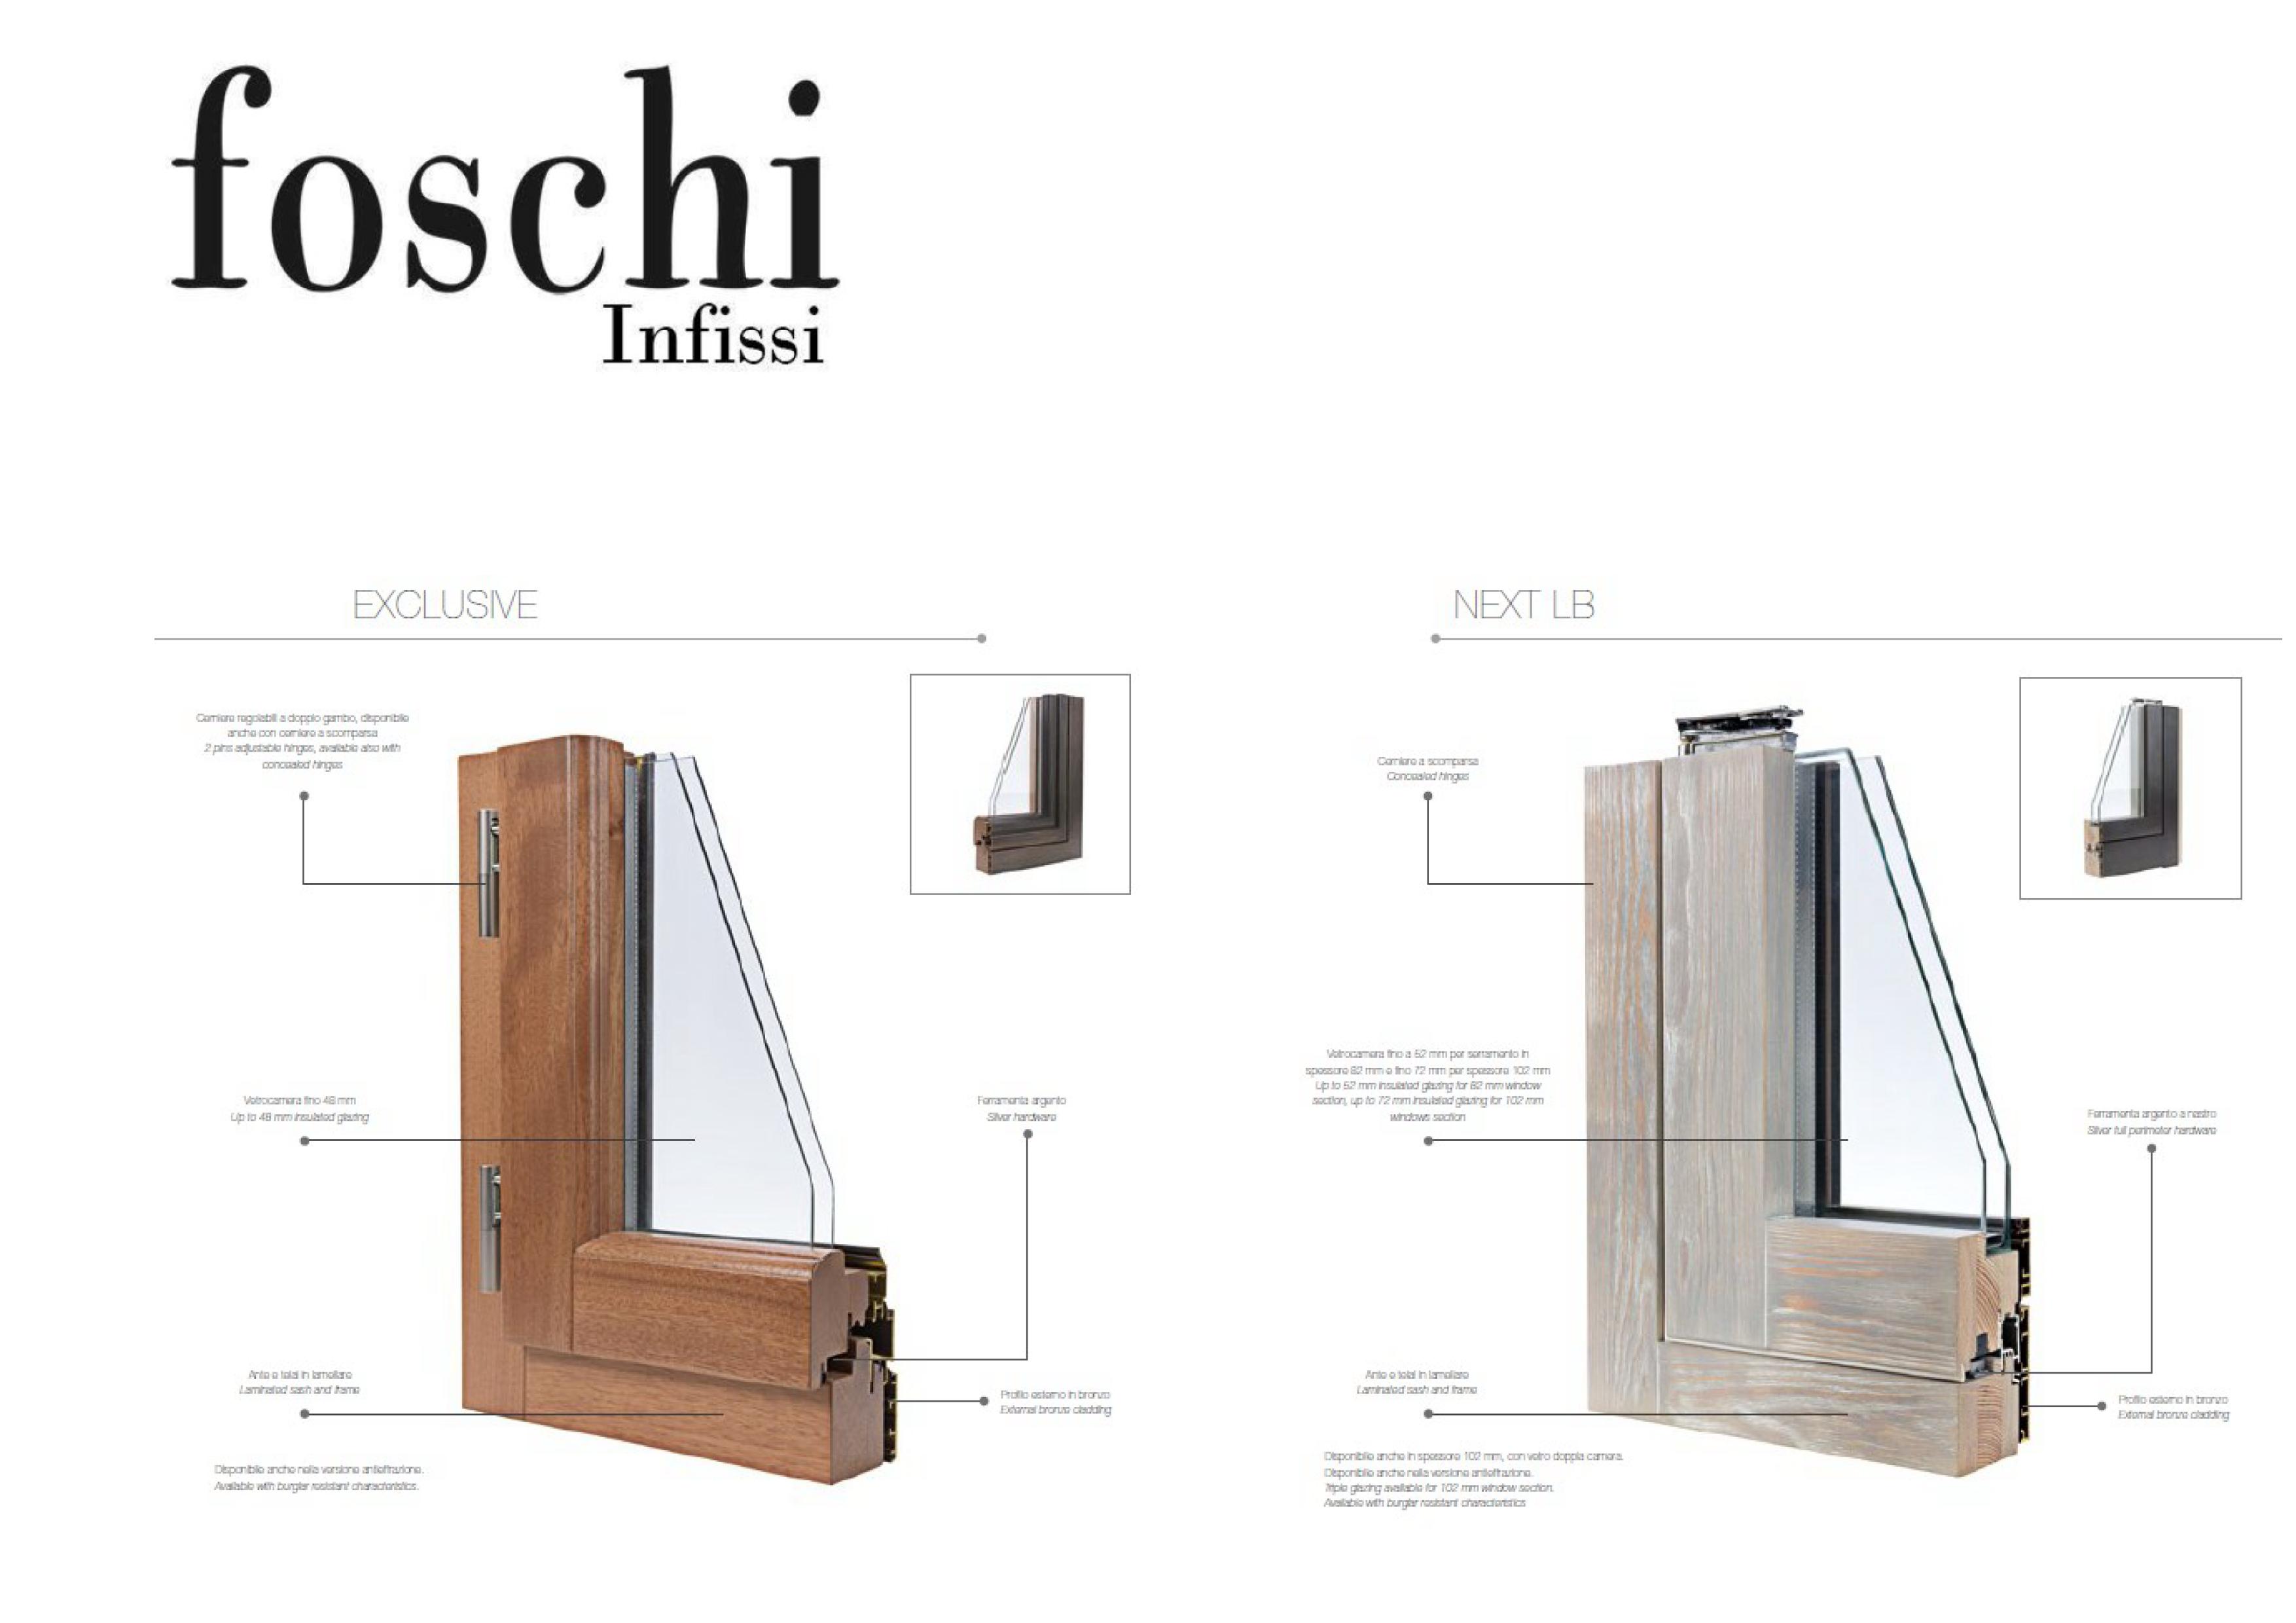 Foschi Infissi - Infissi -> Legno - Legno Alluminio -> Exclusive - Next LB